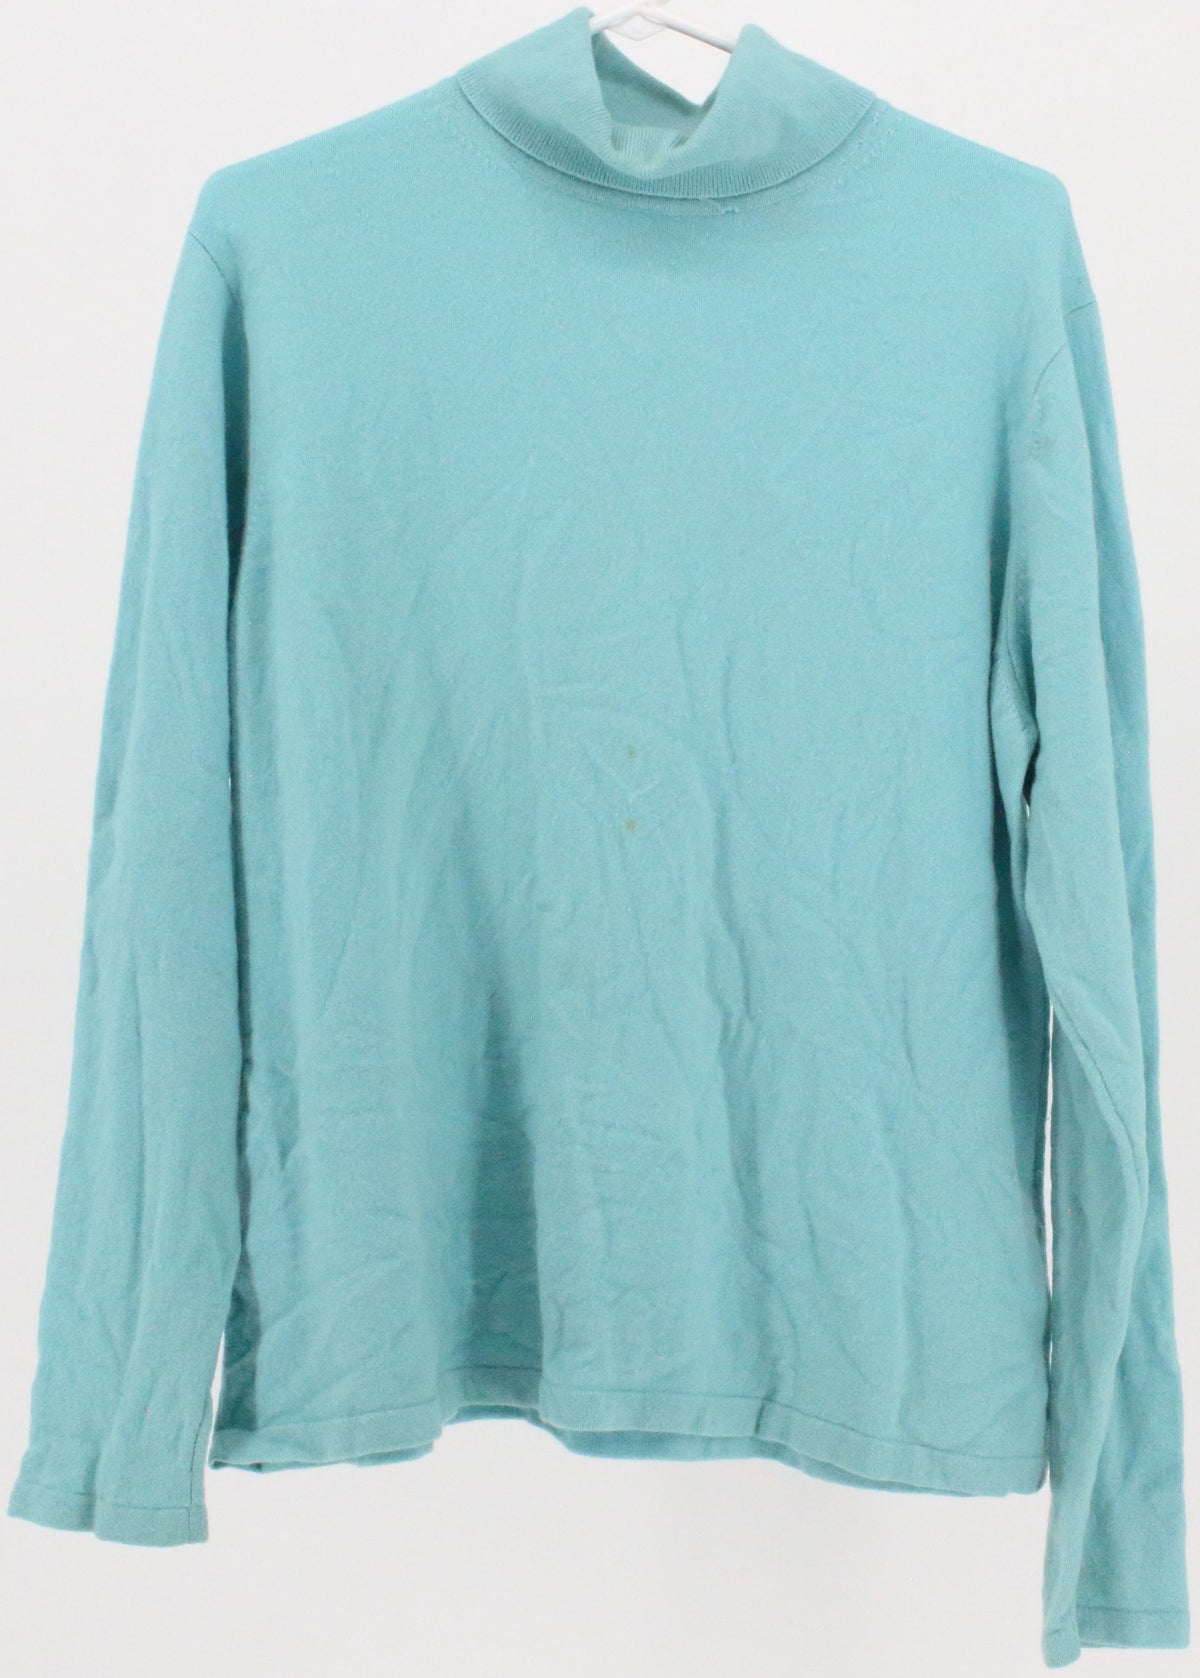 L.L.Bean Aqua Green Turtleneck Cashmere Sweater